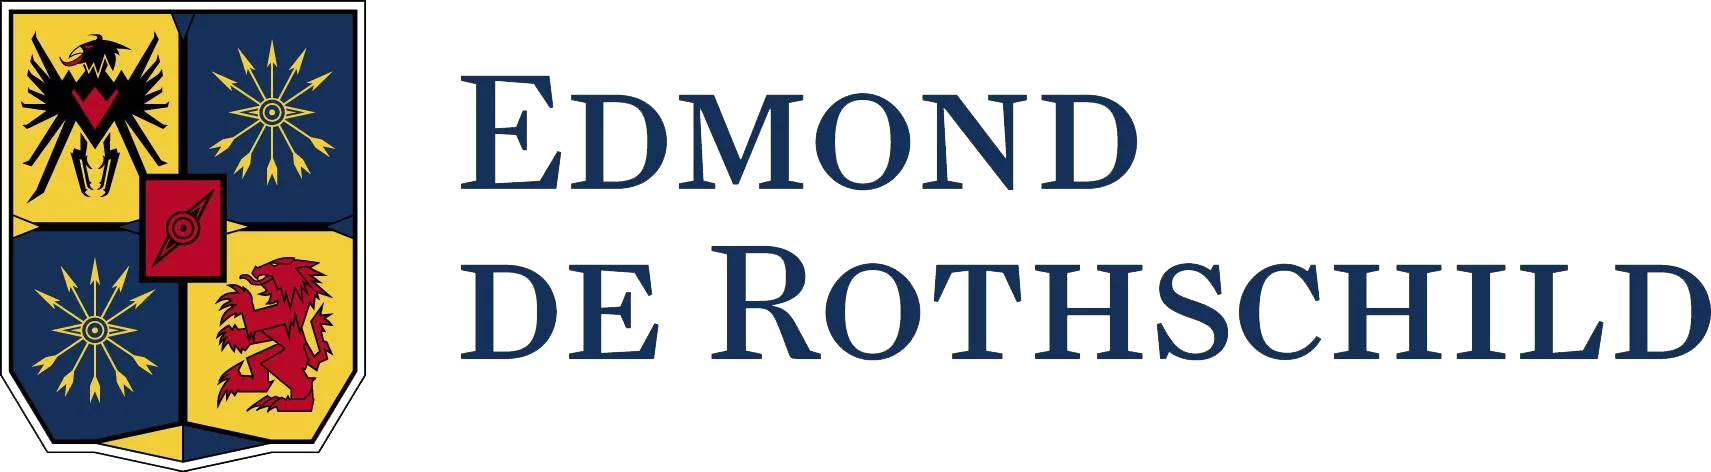 edmond-de-rothschild-1